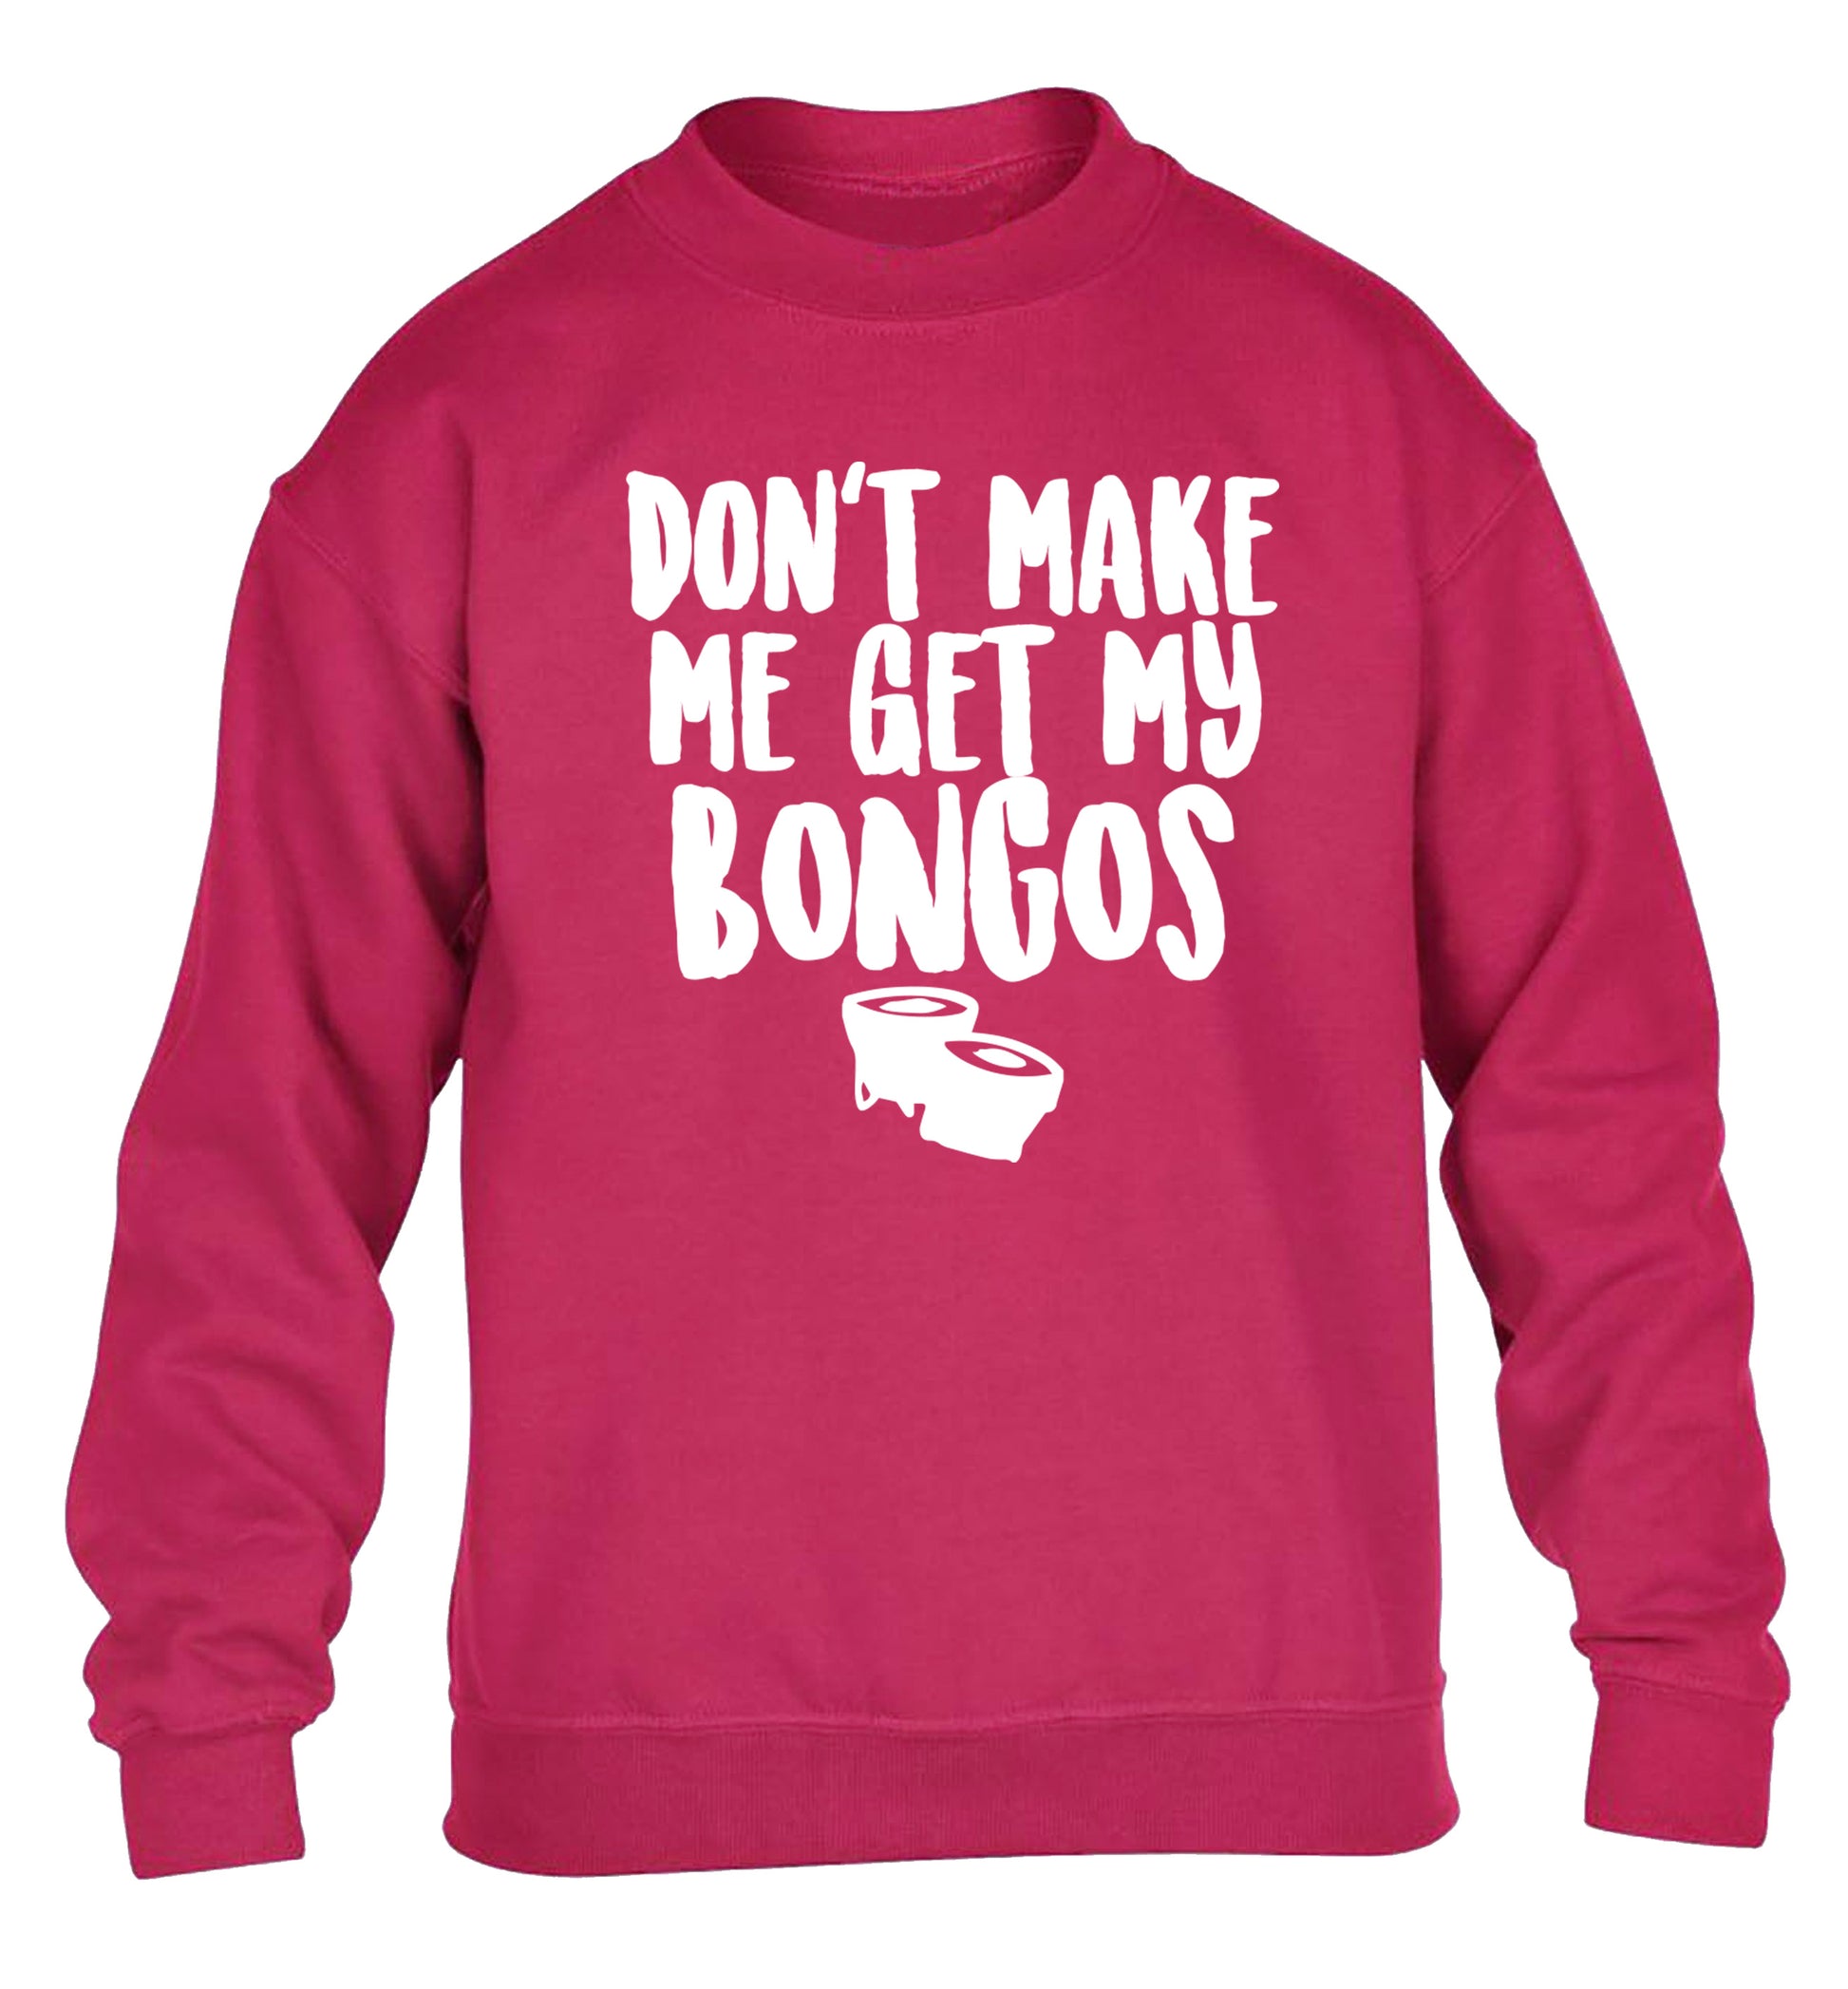 Don't make me get my bongos children's pink sweater 12-14 Years